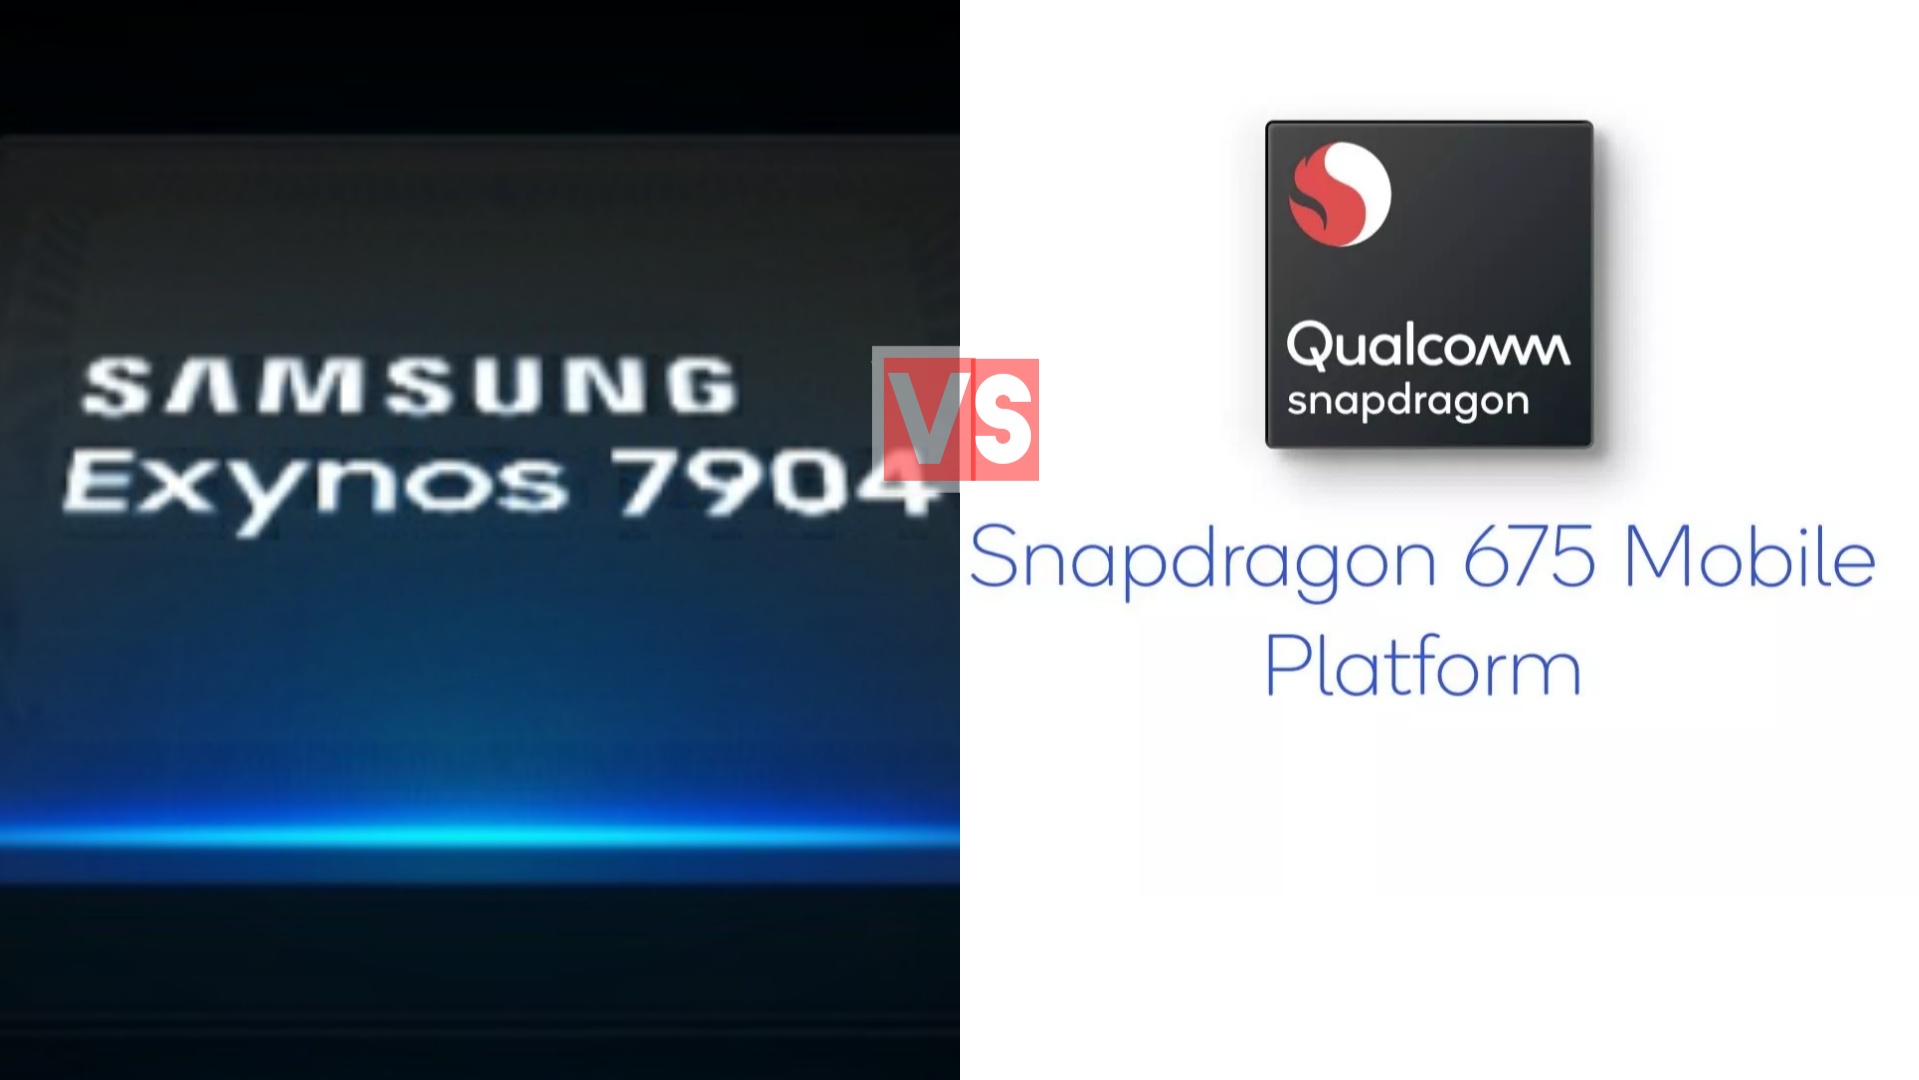 Samsung Exynos 7904 Vs Qualcomm Snapdragon 675